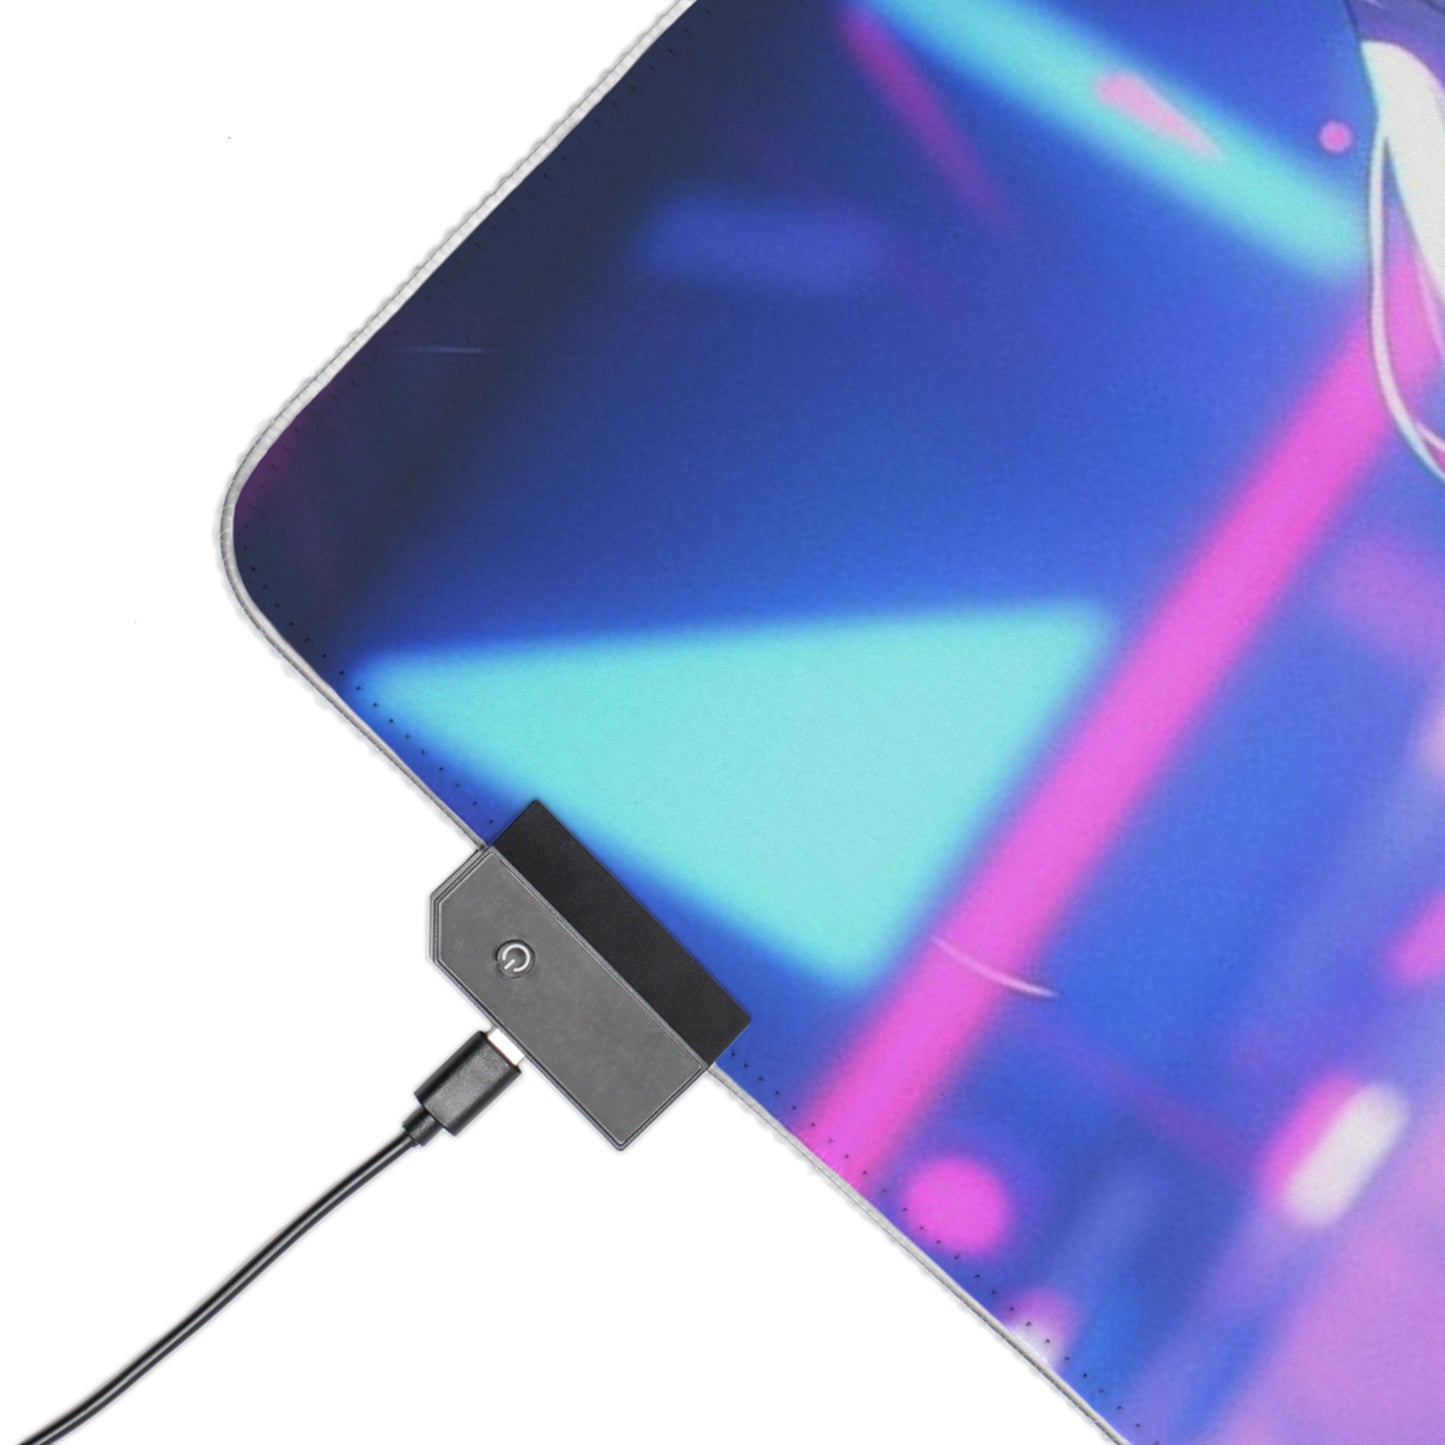 Neon Dreams-2 LED Gaming Mouse Pad